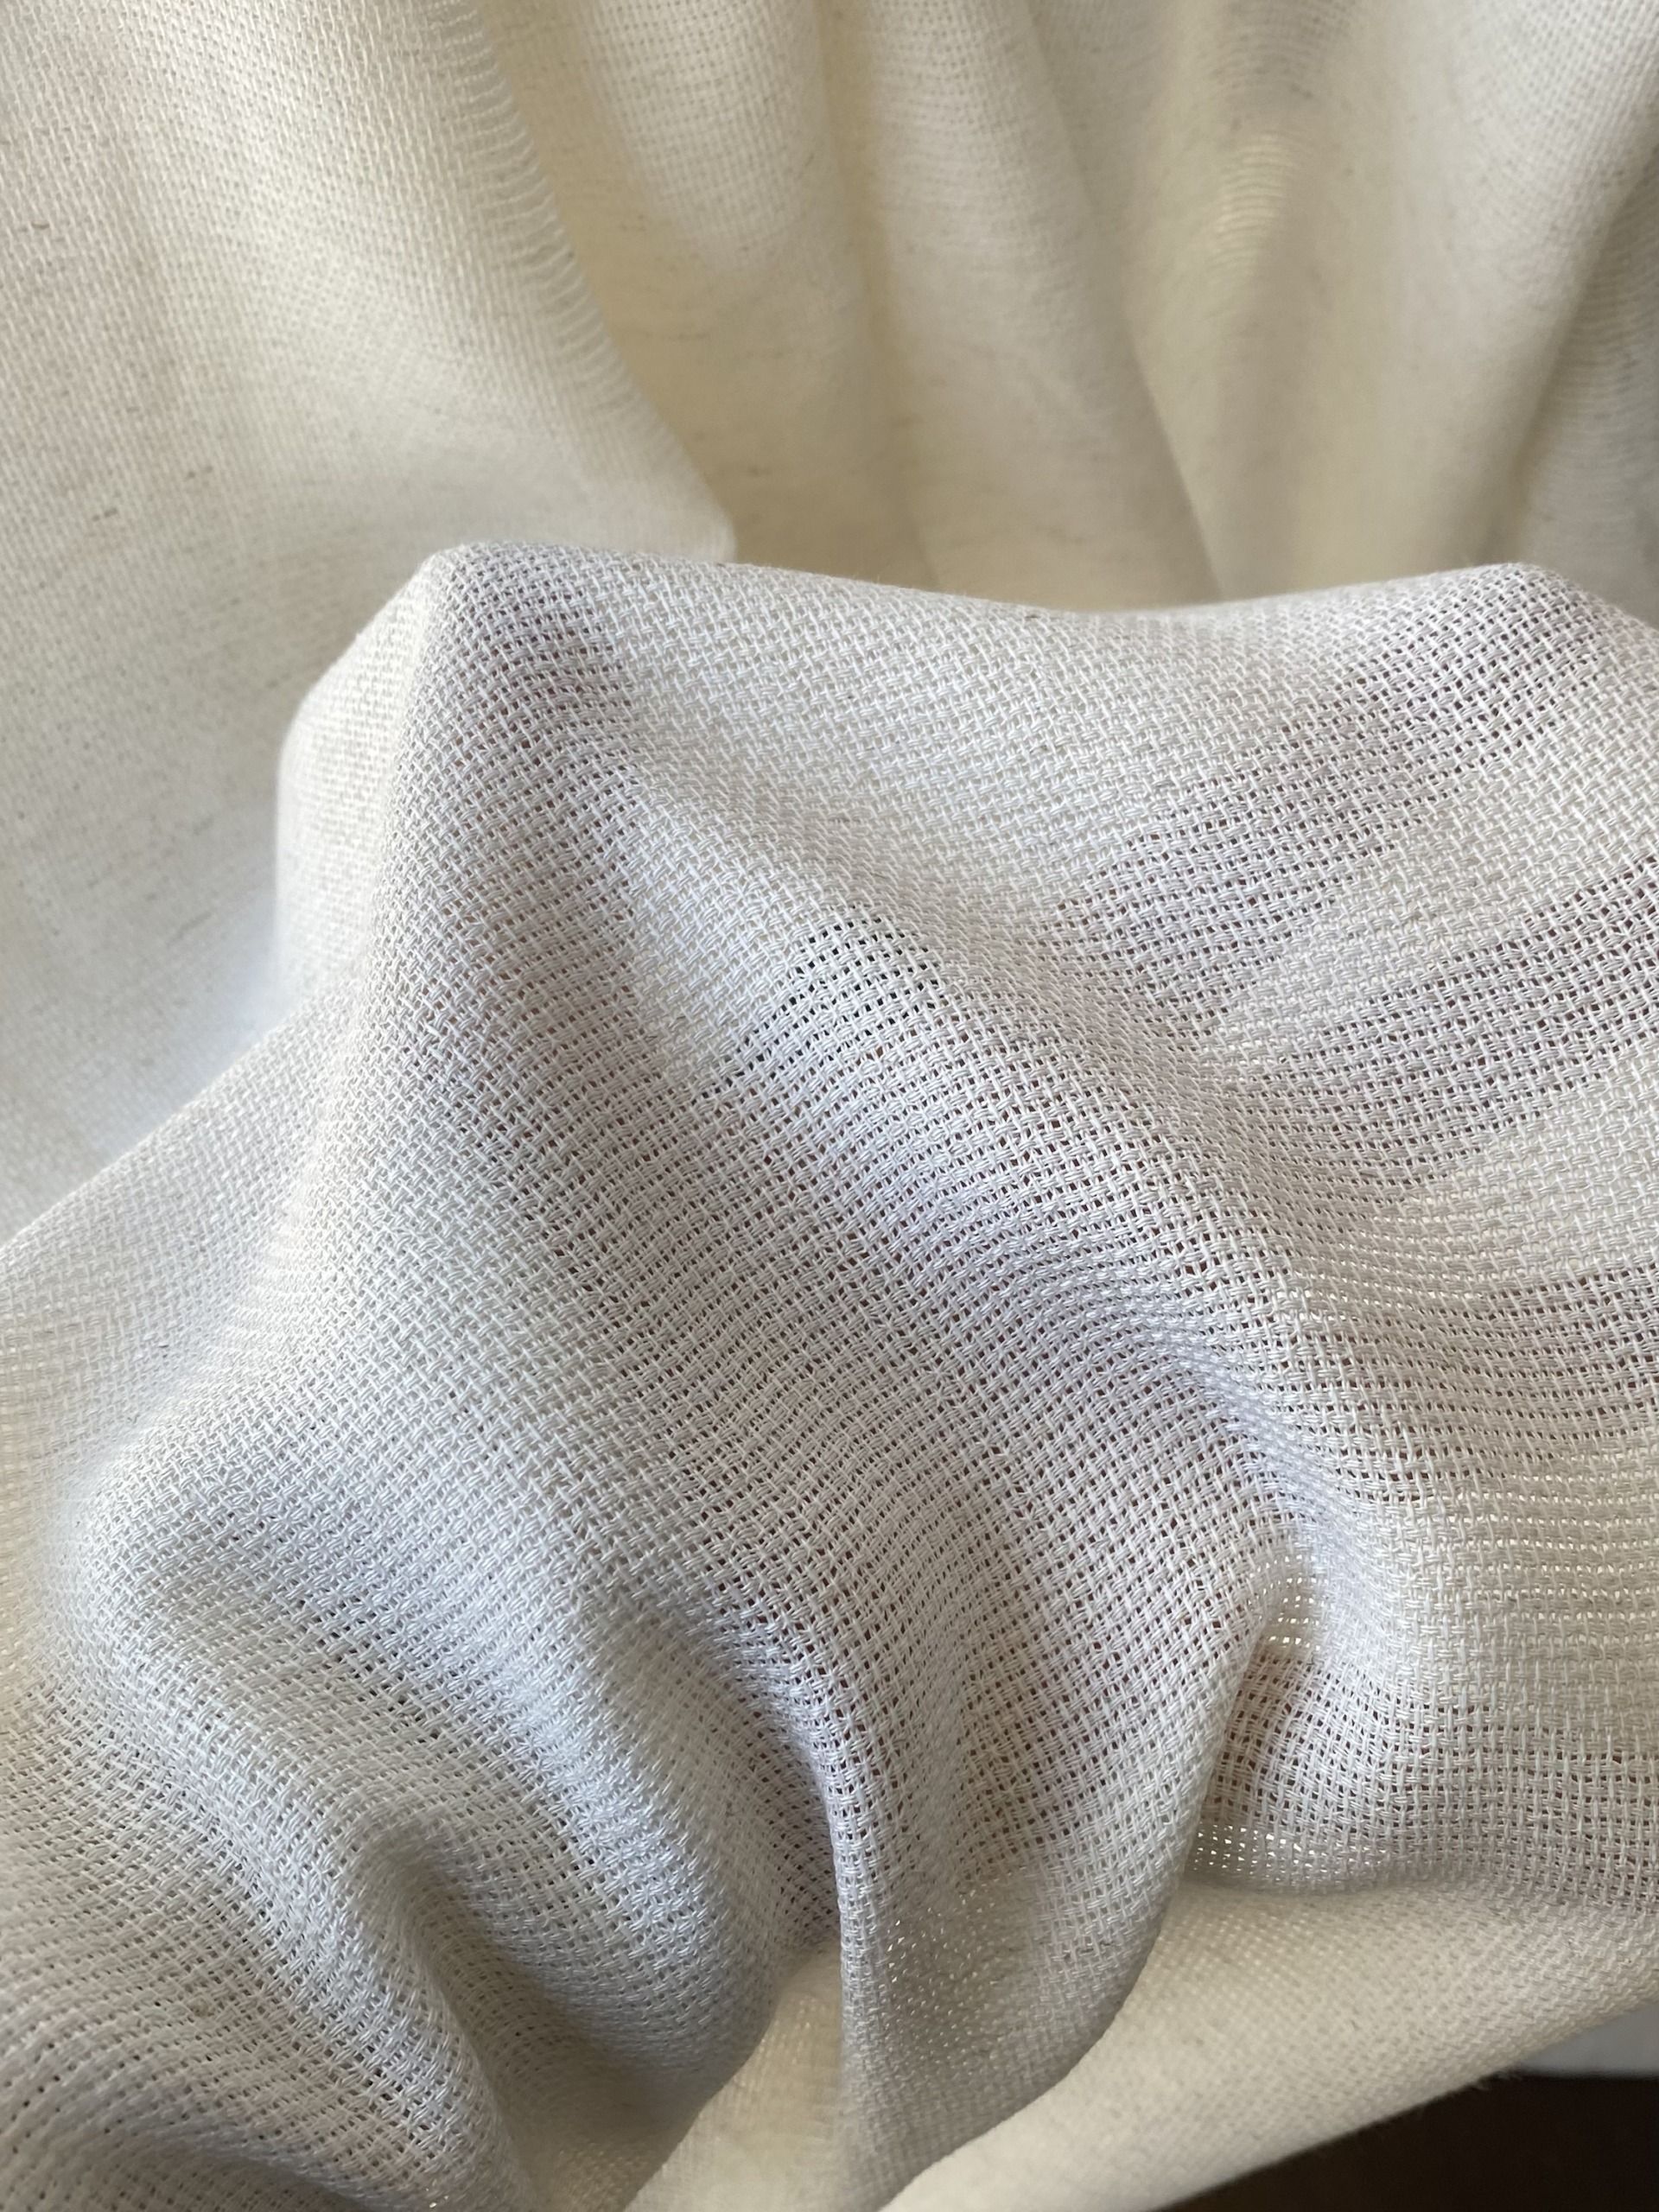 Gauze type fabric viscose linen natural colour | Bodikian Textiles